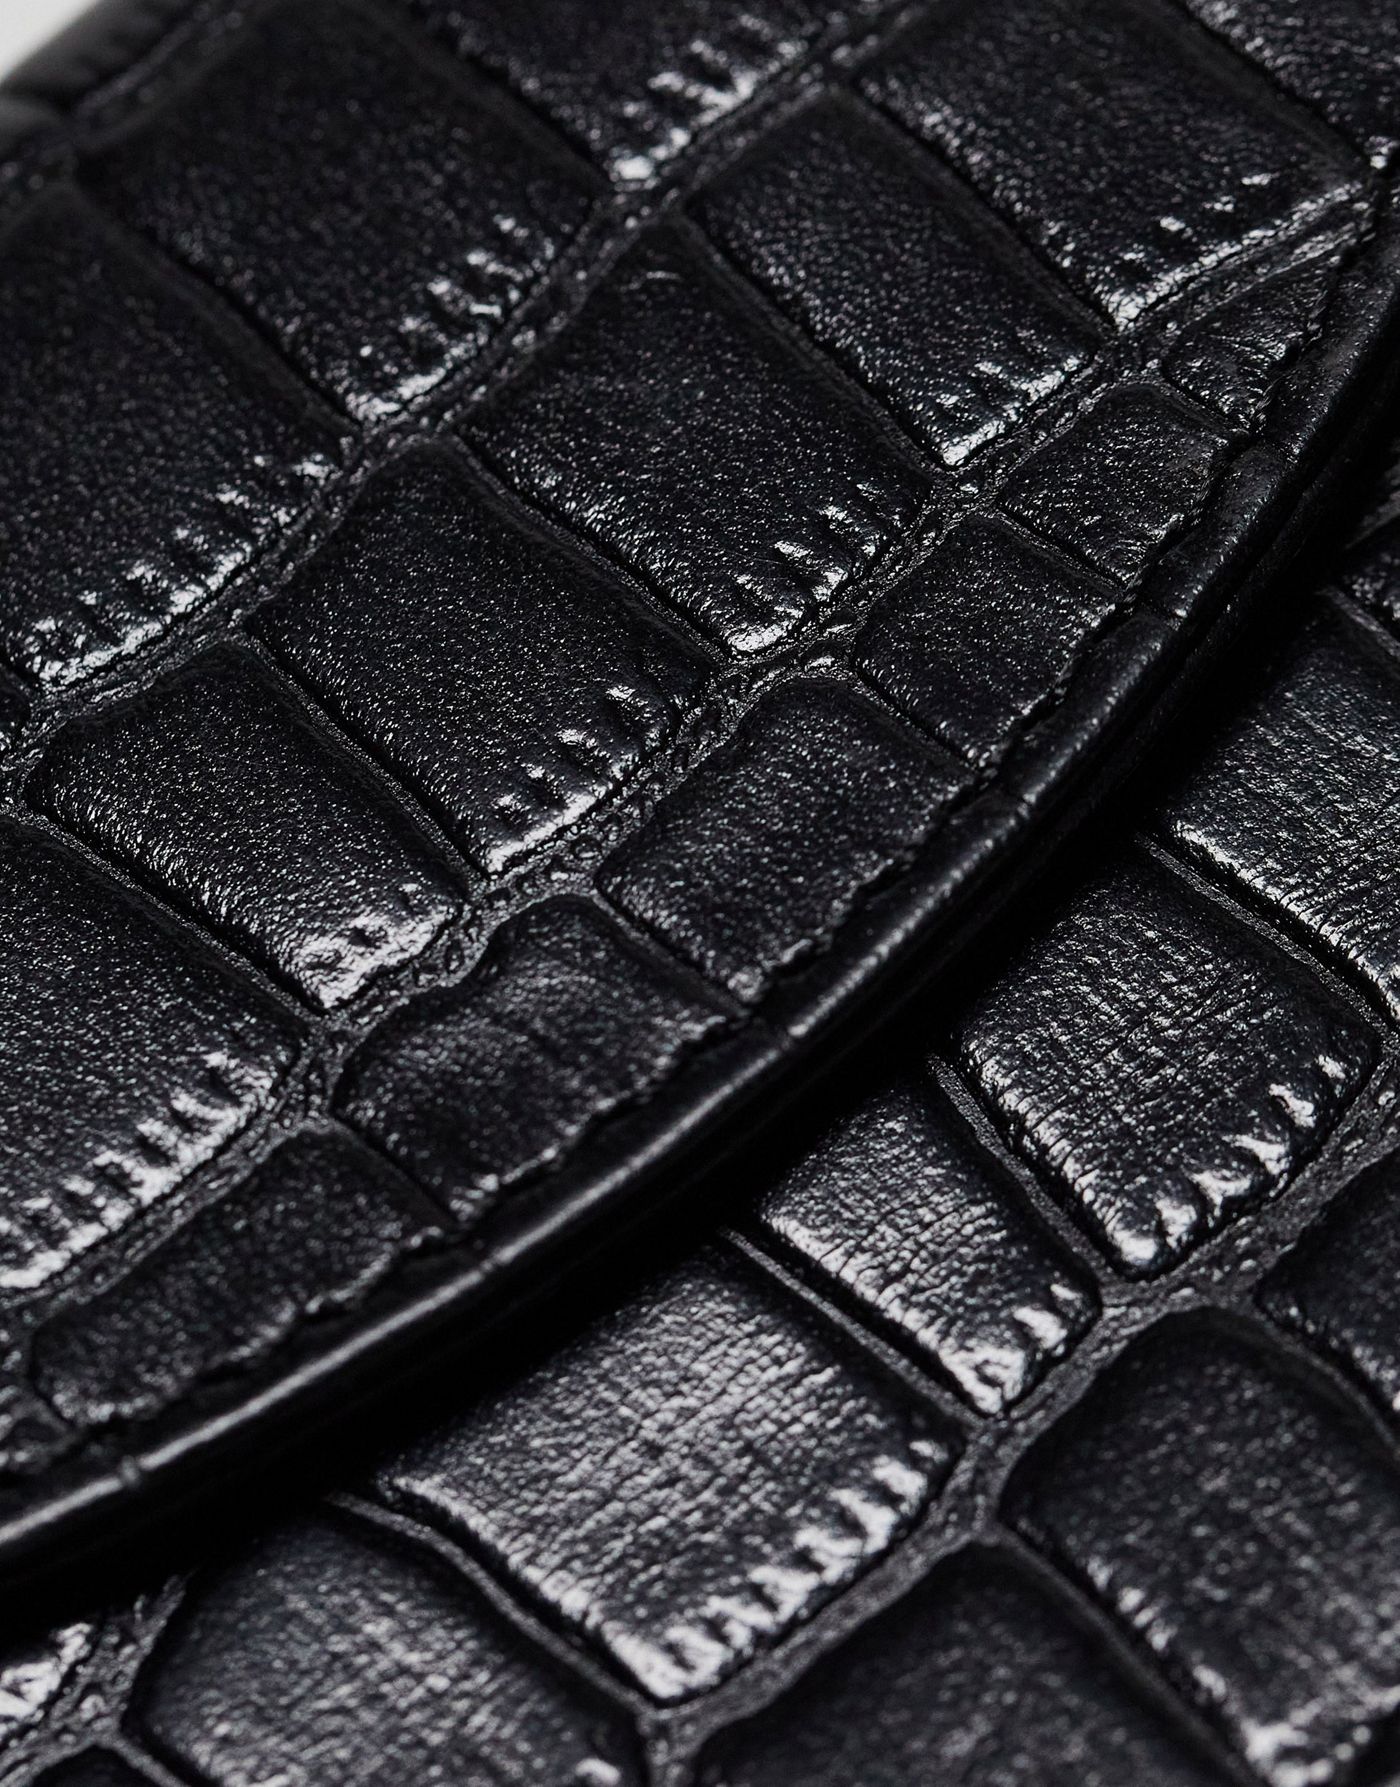 ASOS DESIGN leather envelope cardholder and coin purse in black croc